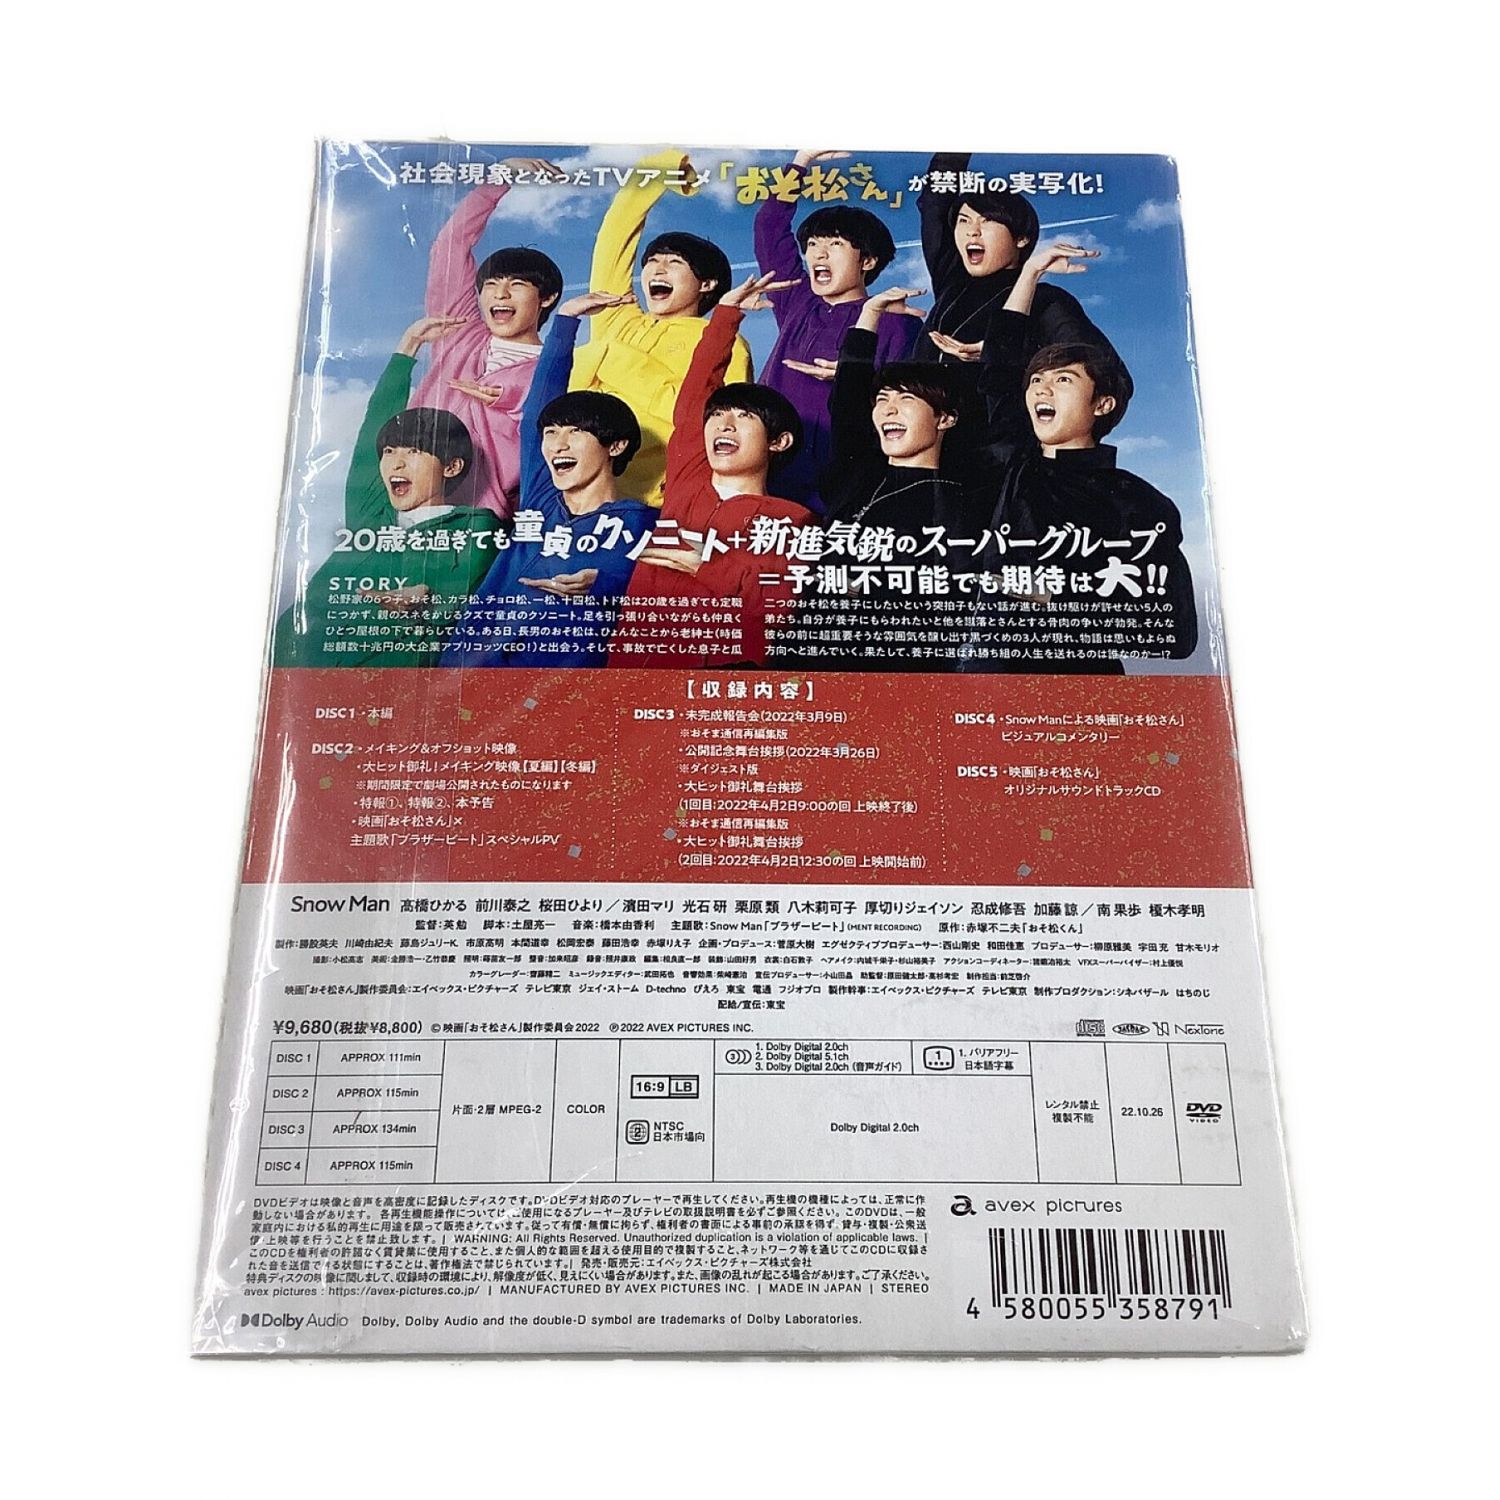 Snow Man 映画おそ松さん 超豪華コンプリートBOX DVD ...